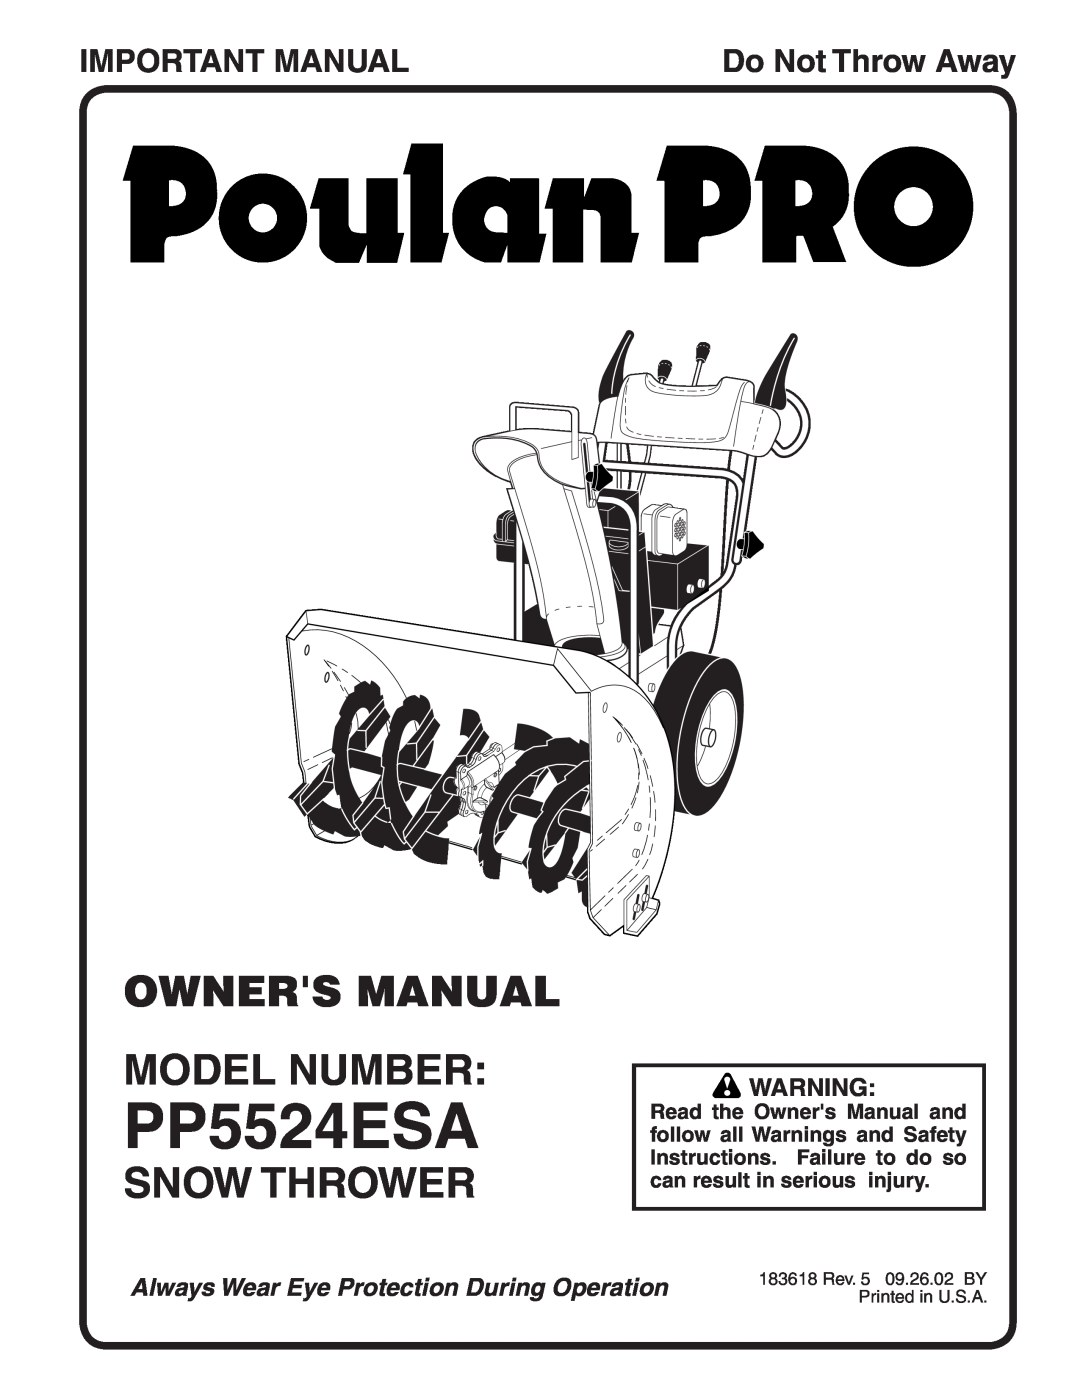 Poulan 183618 owner manual Snow Thrower, Important Manual, PP5524ESA, Do Not Throw Away 